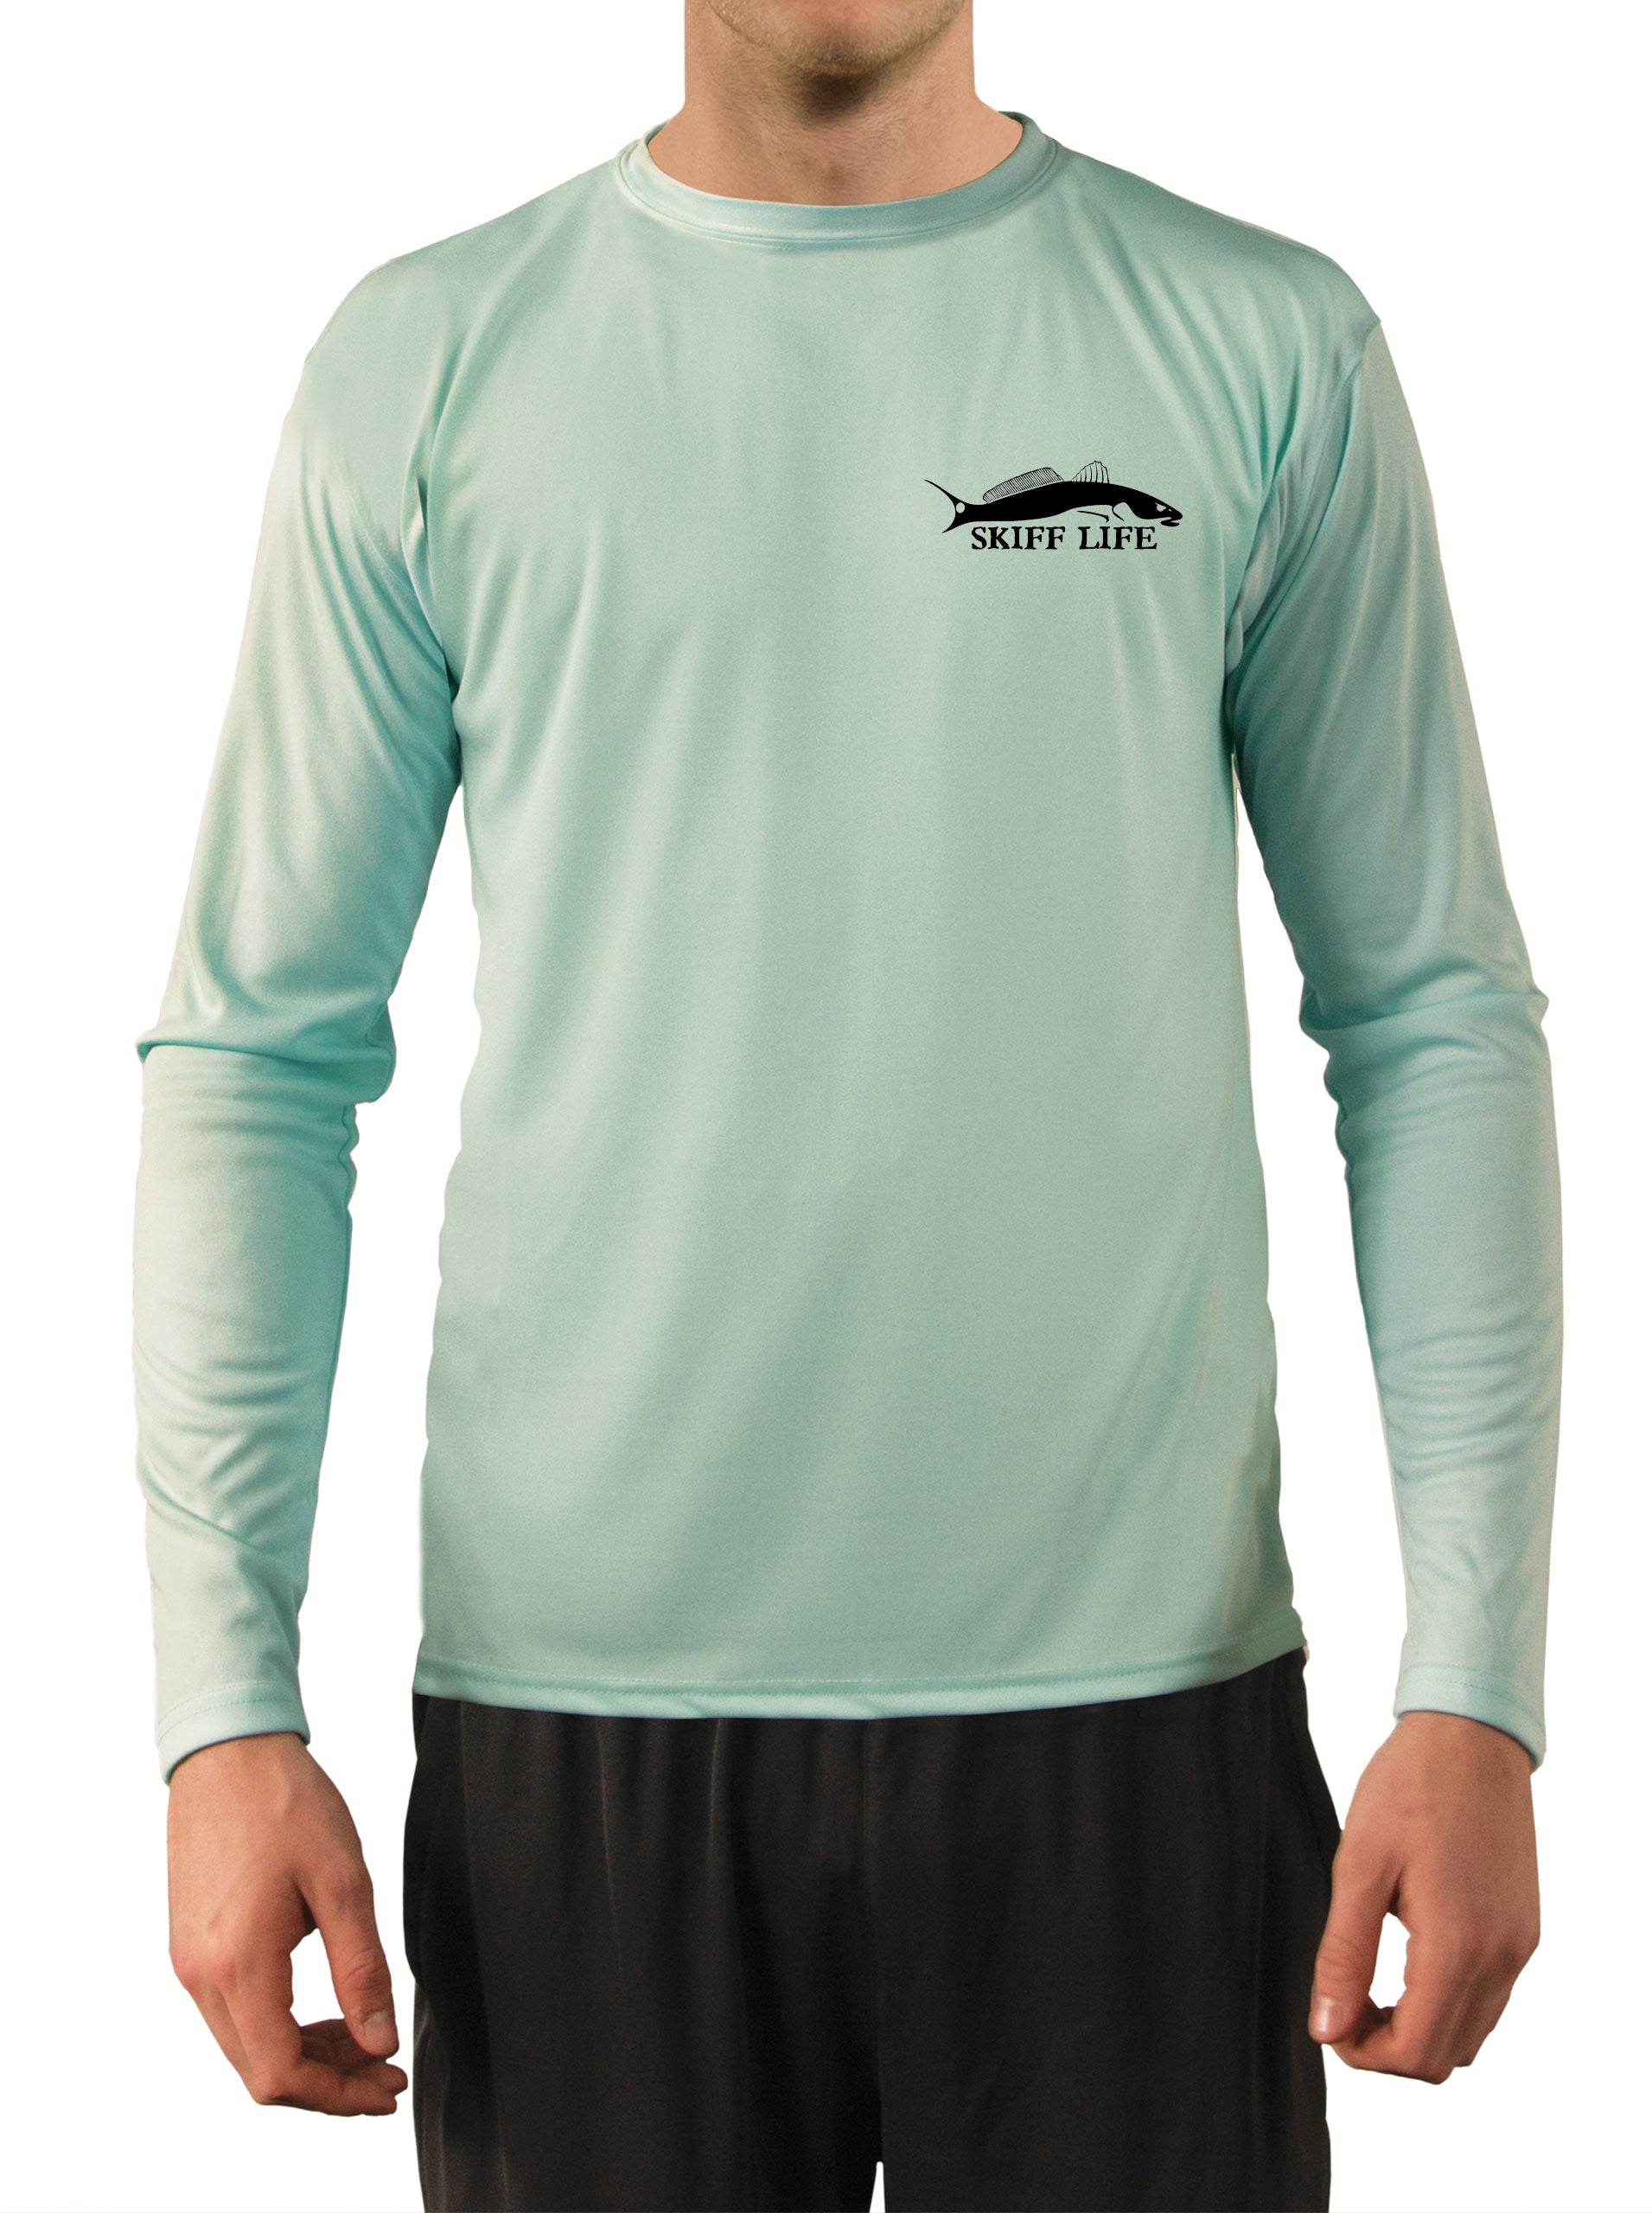 Fishing Shirts Men's Quick Dry Lightweight UPF 50+ Long Sleeve Shirts Rash Guard Swim Shirts Hiking Shirts Moisture Wicking 4XL / Seagrass